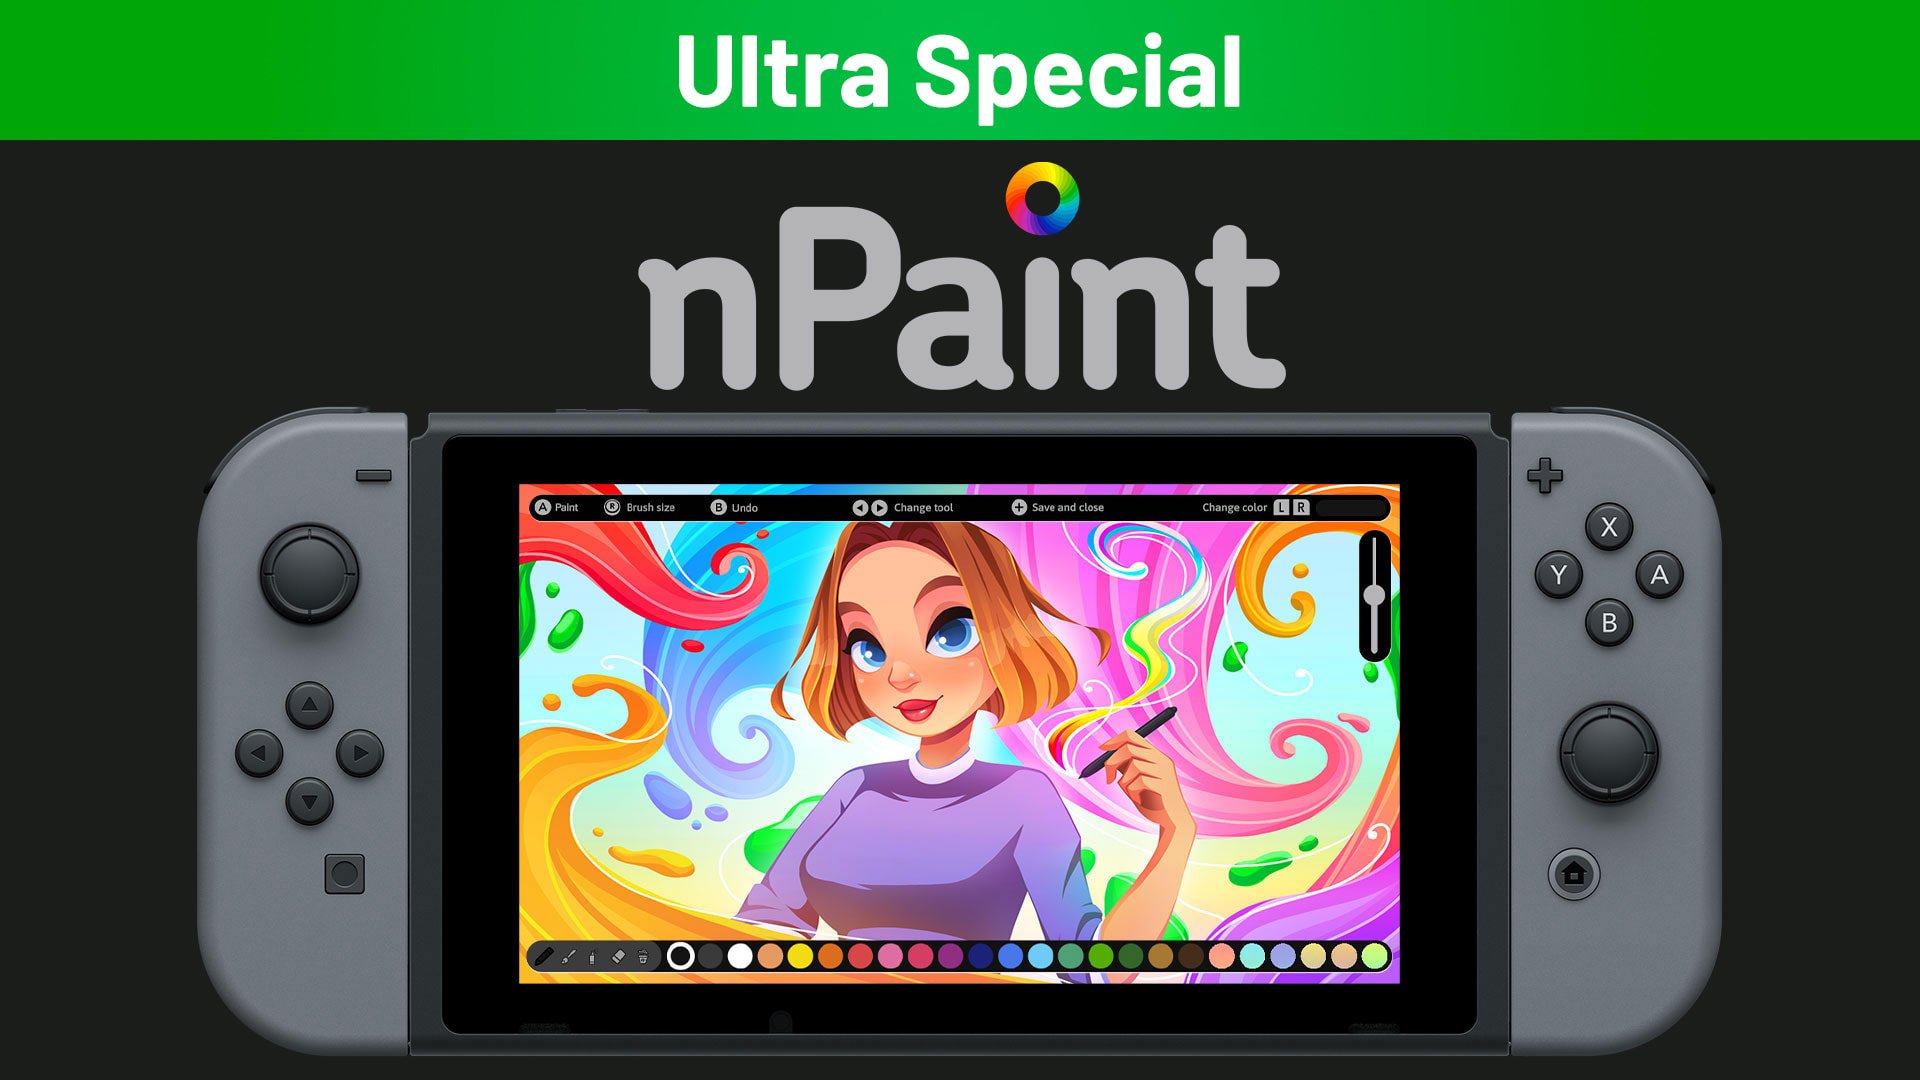 nPaint Ultra Special